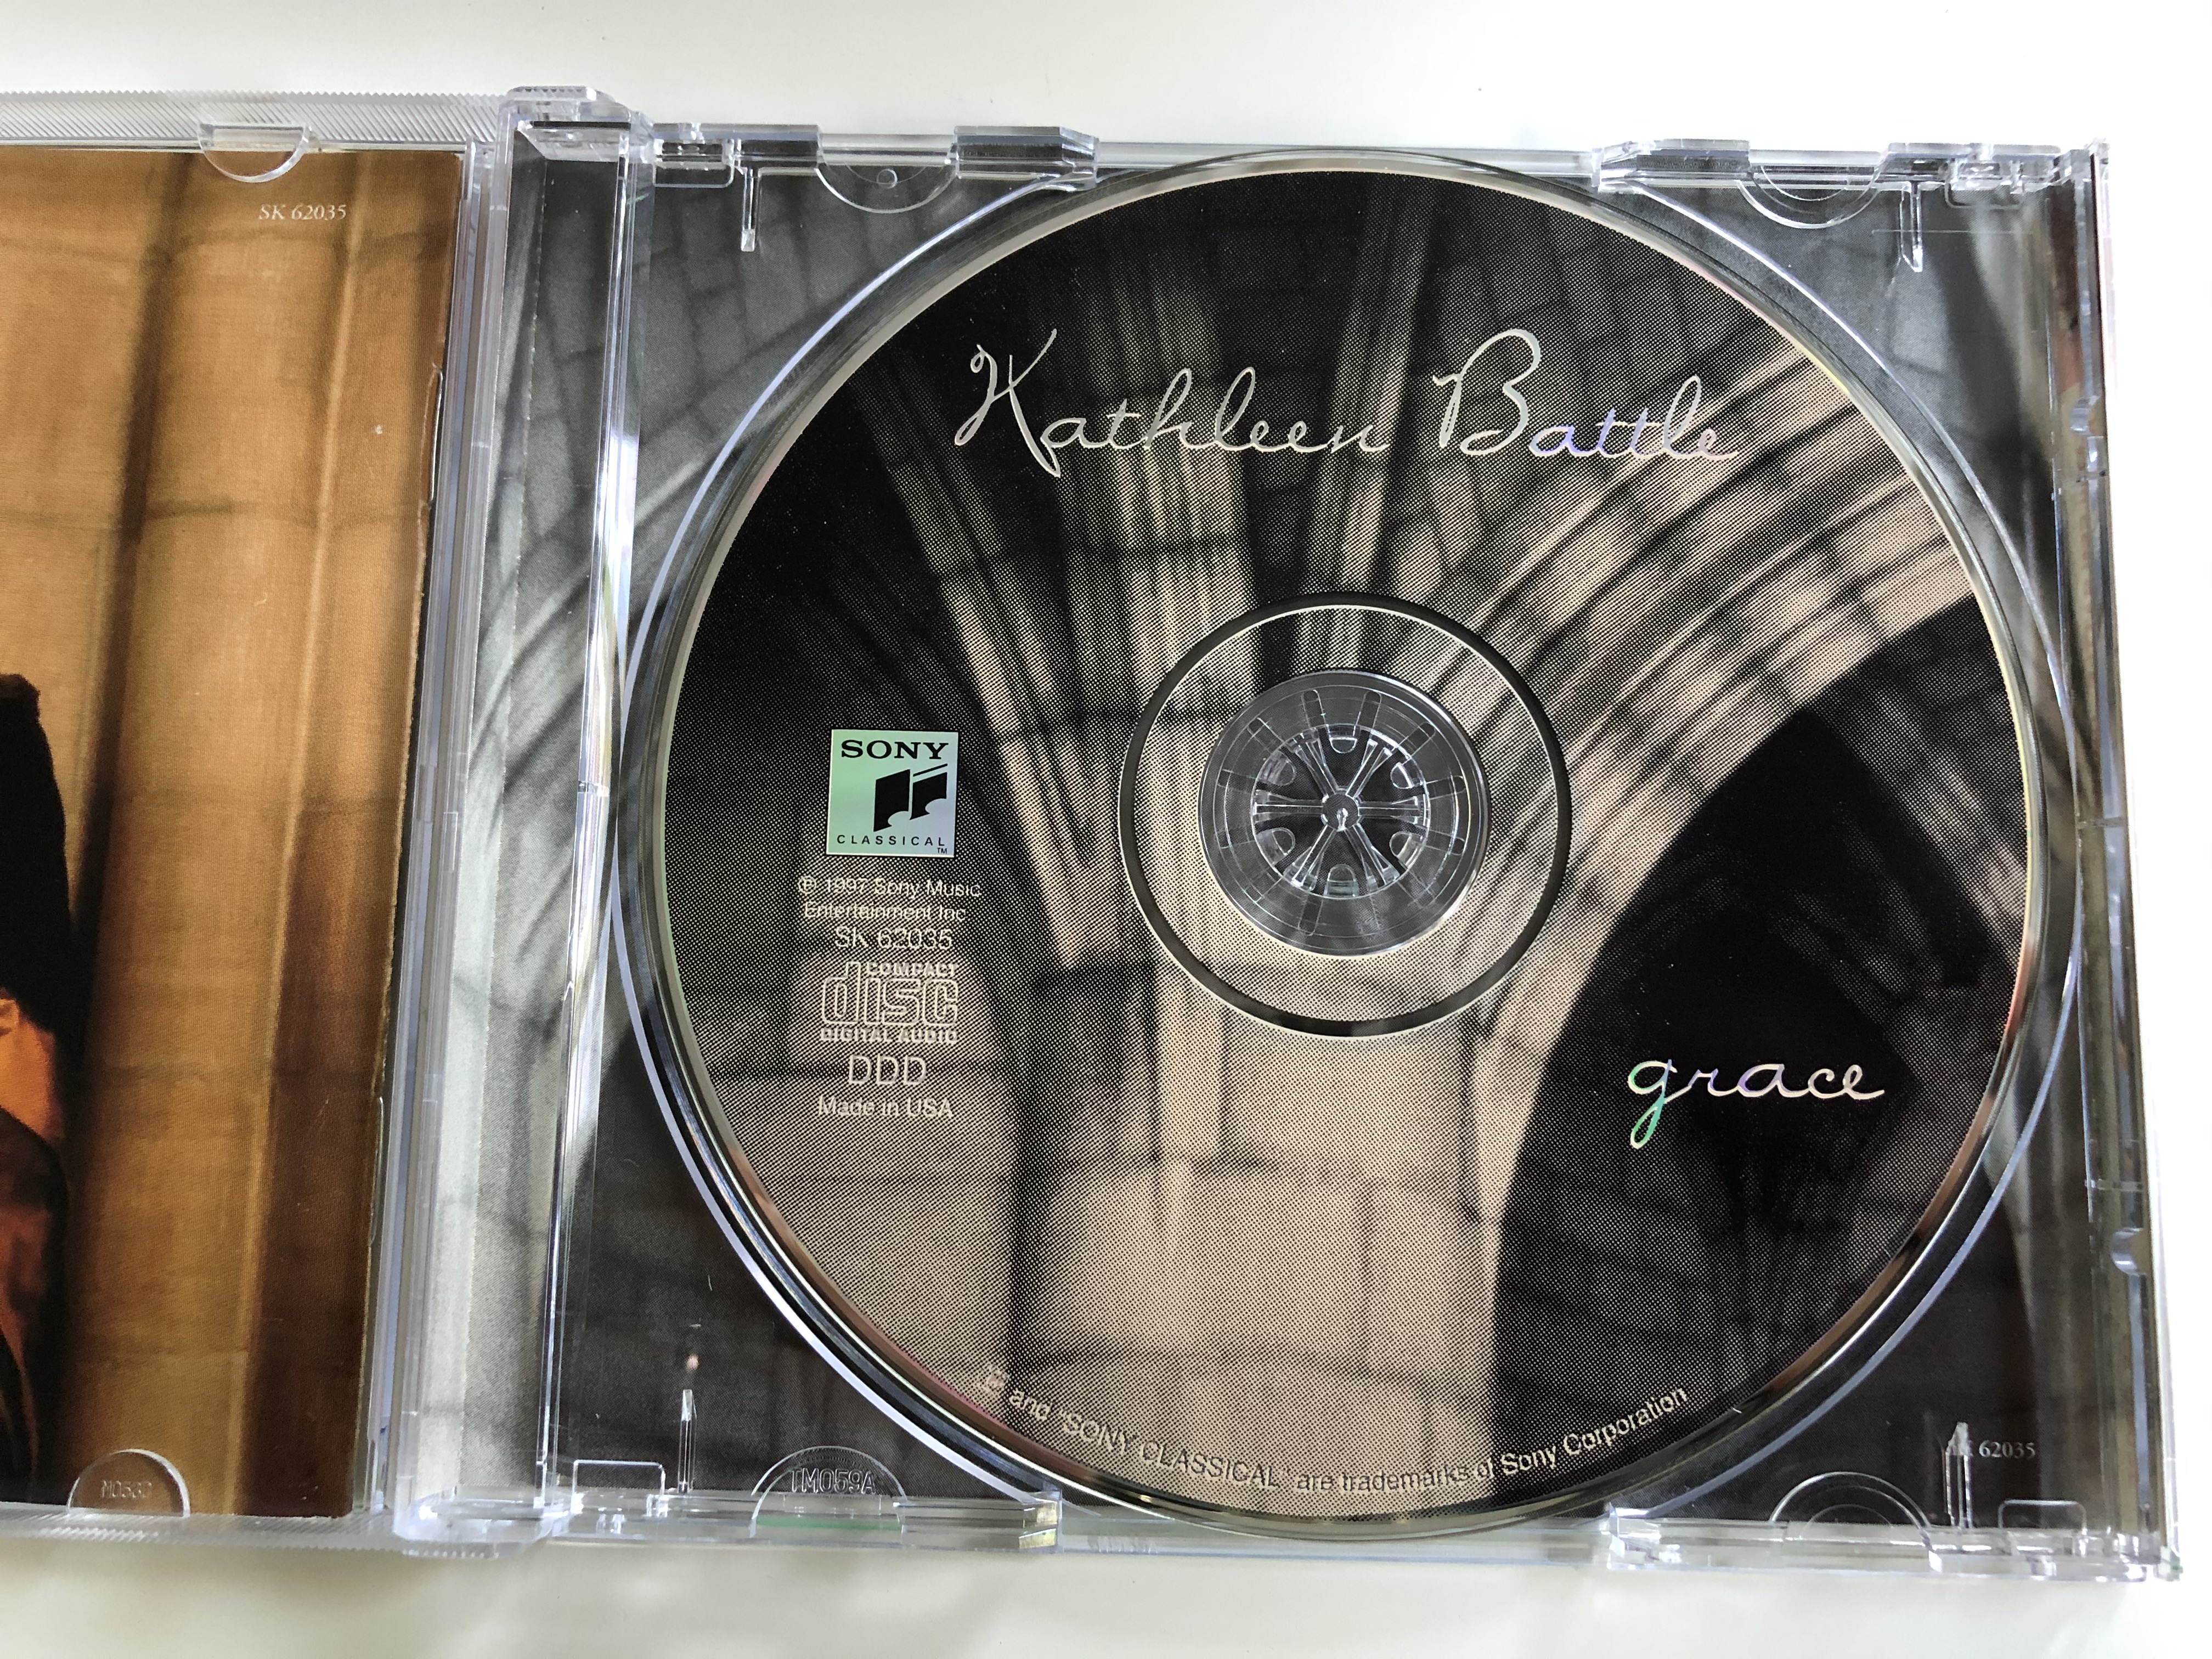 kathleen-battle-grace-robert-sadin-conductor-sony-classical-audio-cd-1997-sk-62035-10-.jpg